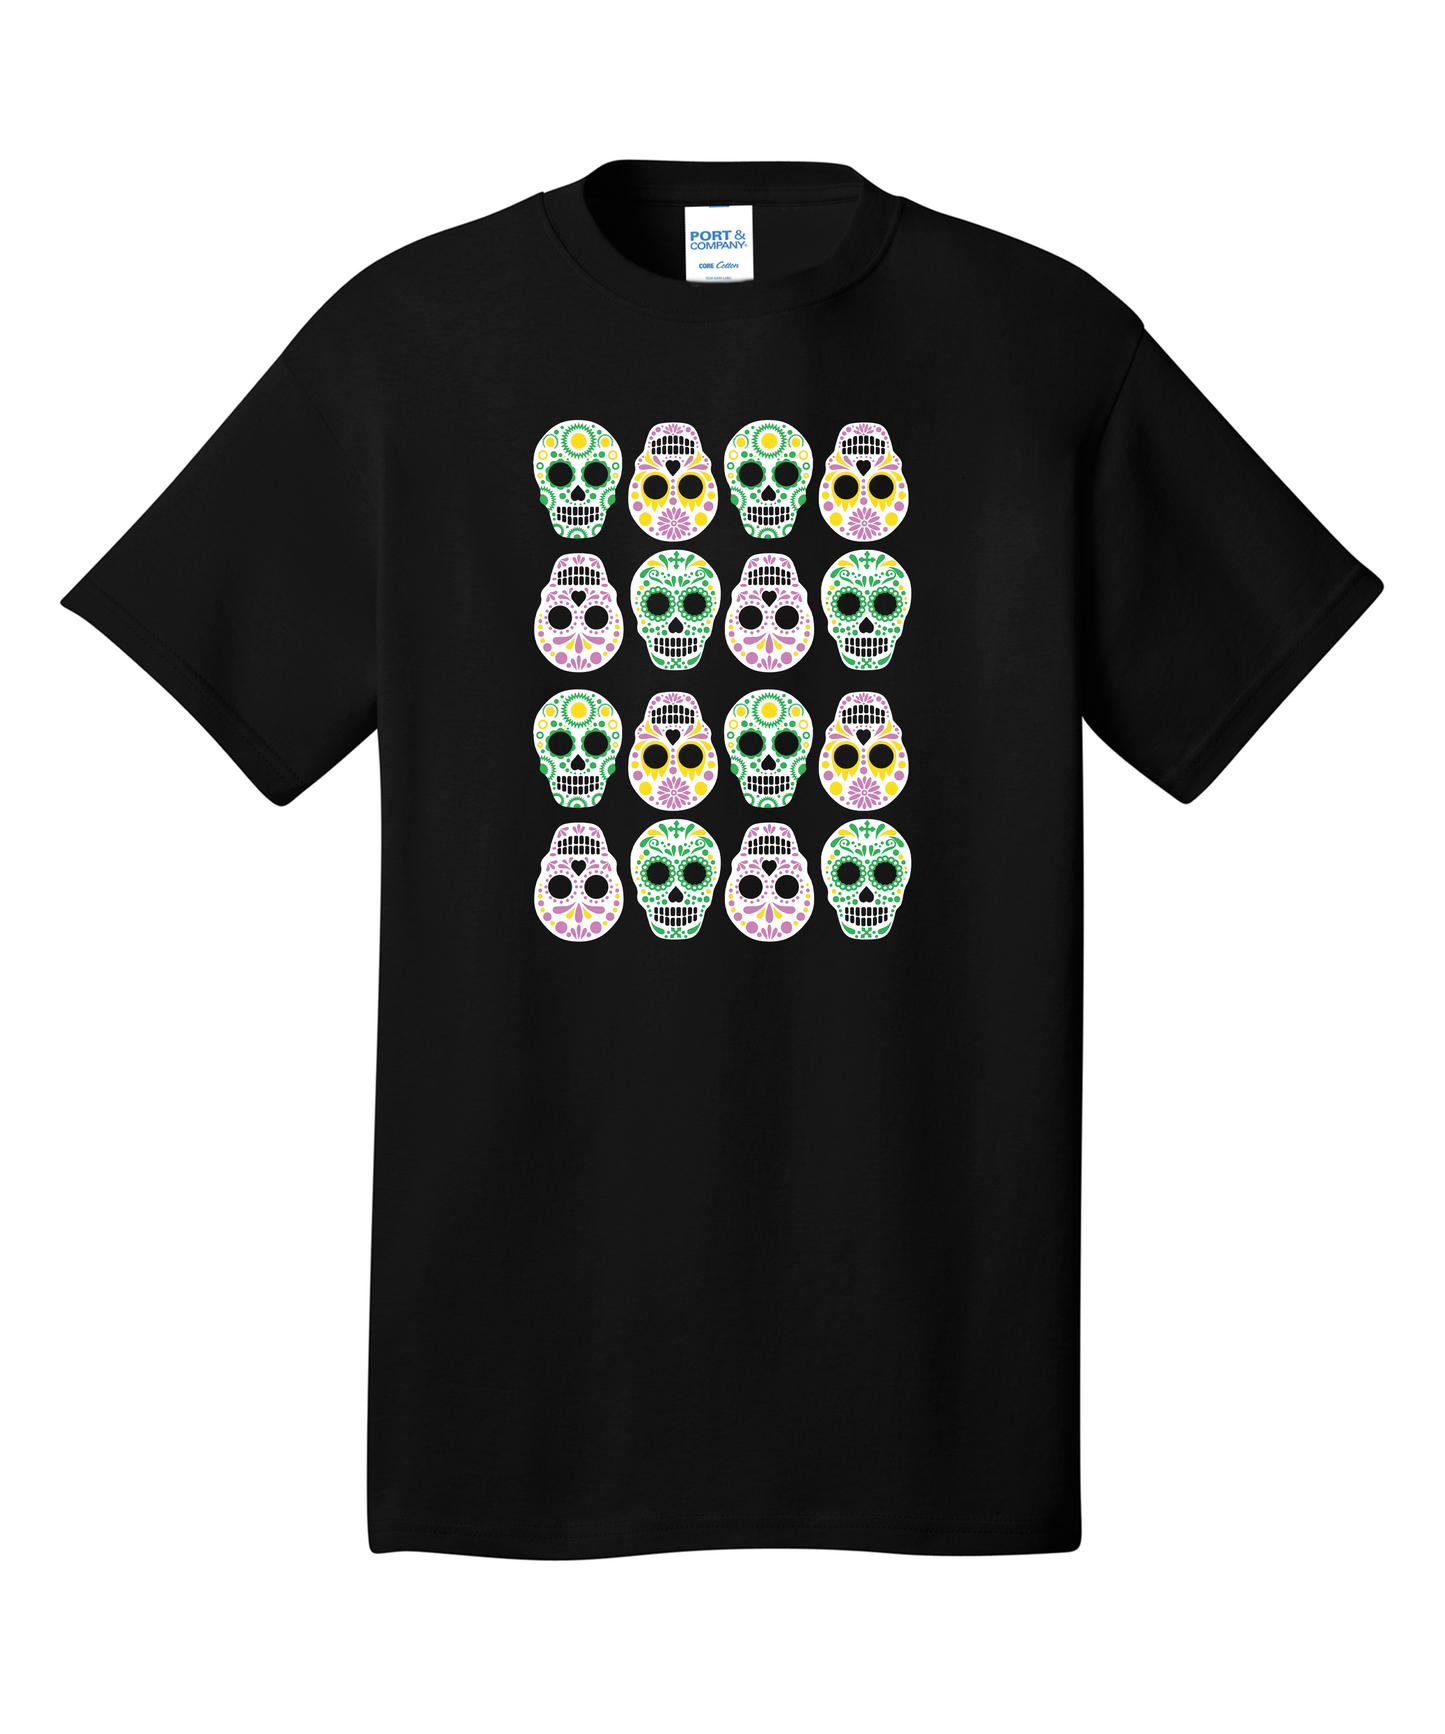 Short Sleeve Halloween Festive Skulls T-Shirt: Spooky Elegance for Your Wardrobe